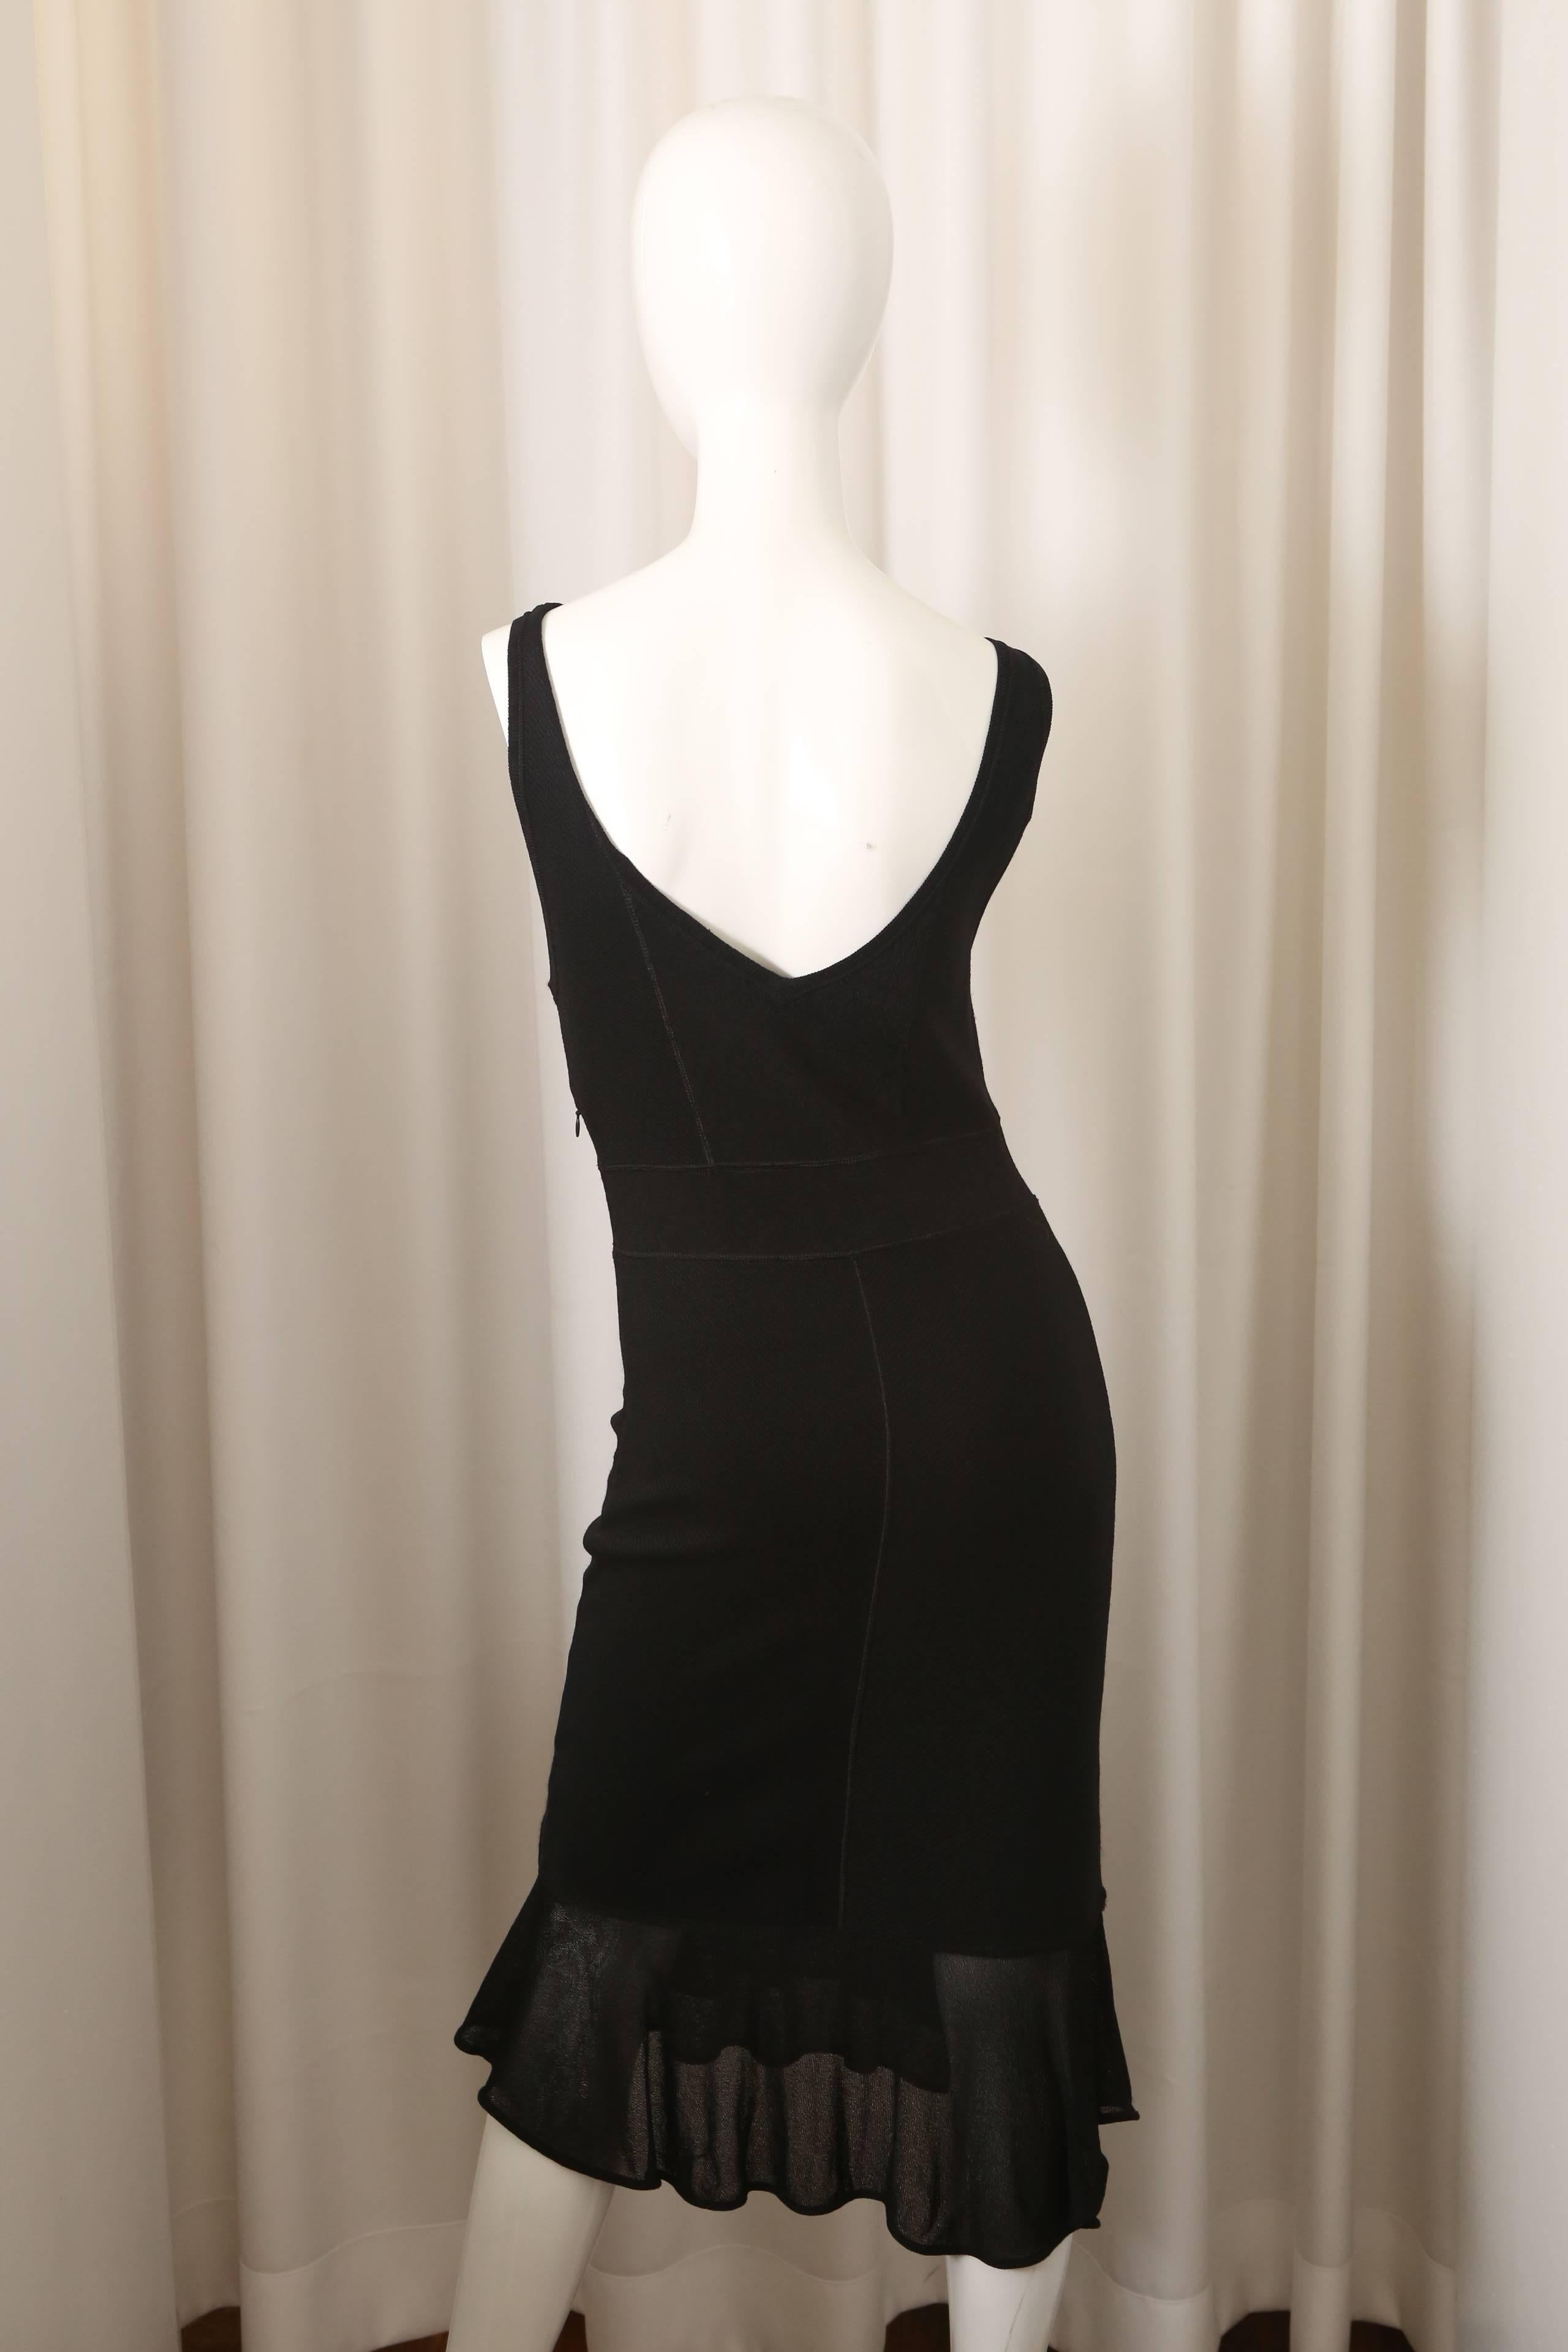 Women's Zac Posen Sleeveless Black Textured Dress W/ Flare Bottom